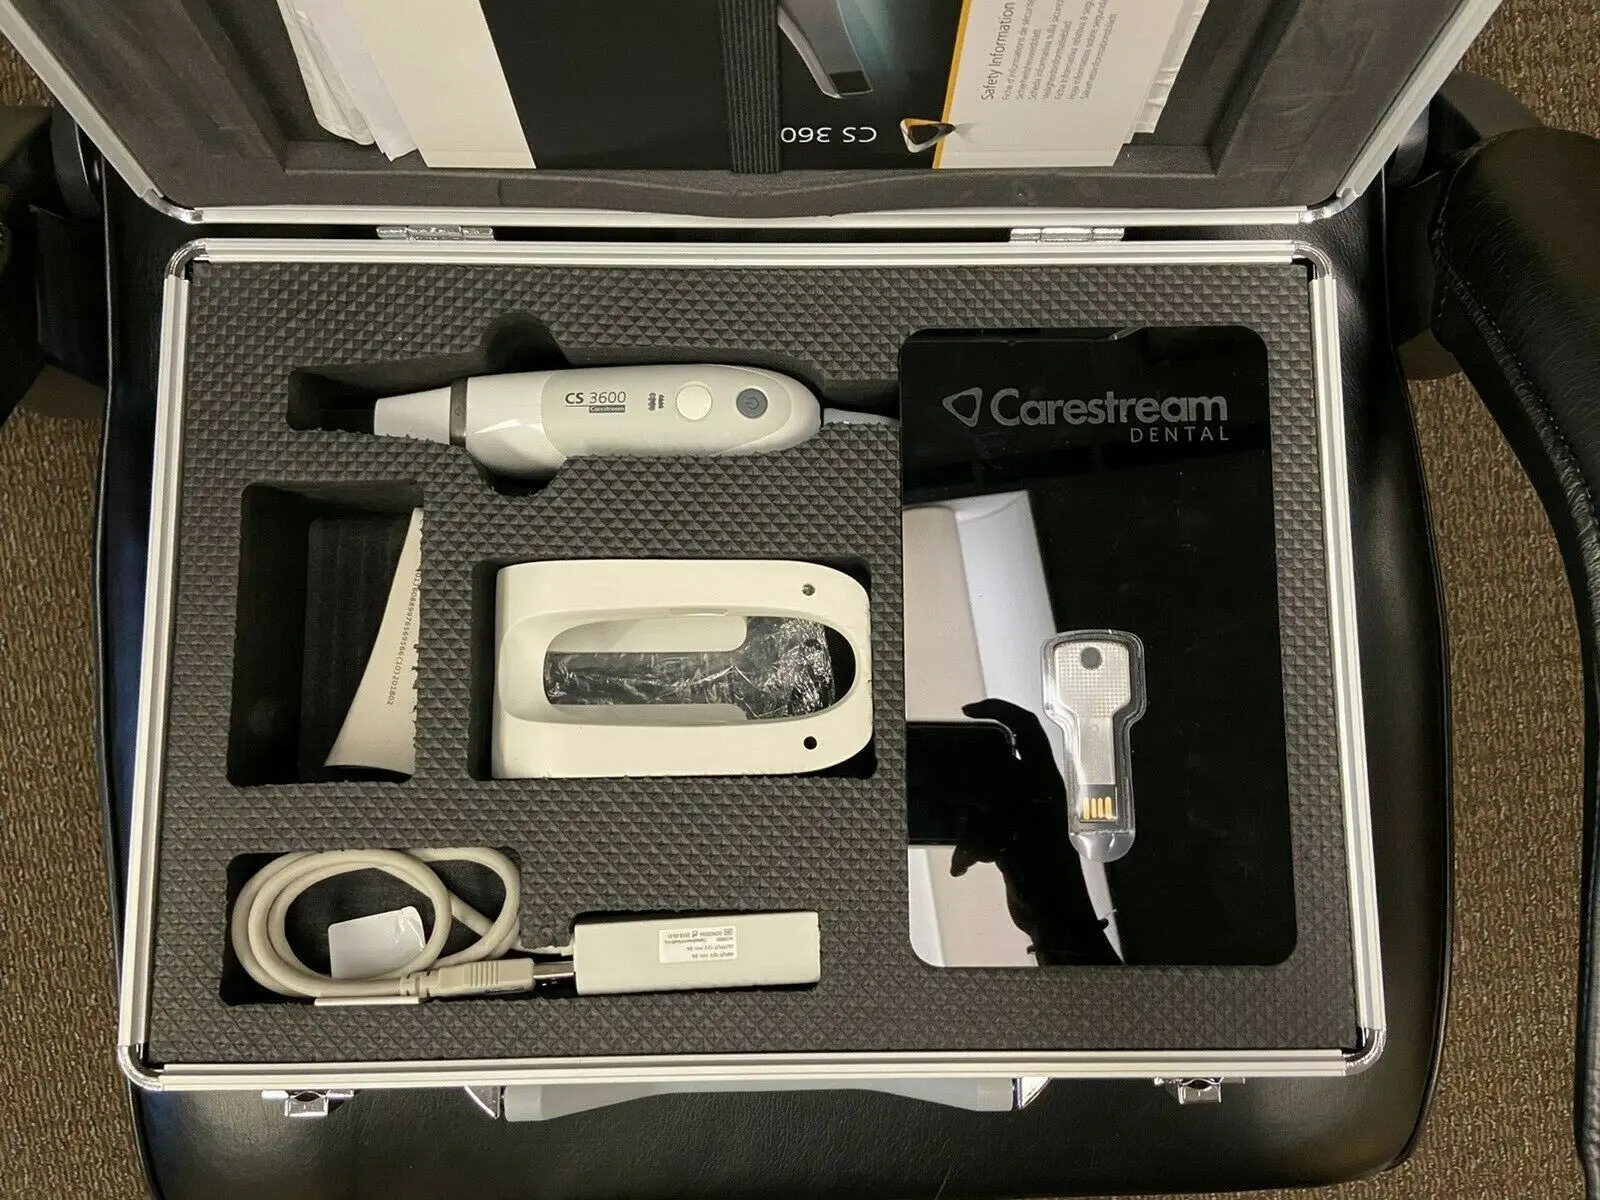 

Y.k Buy 2 get 1 free Carestream CS3600 intra-oral scanner